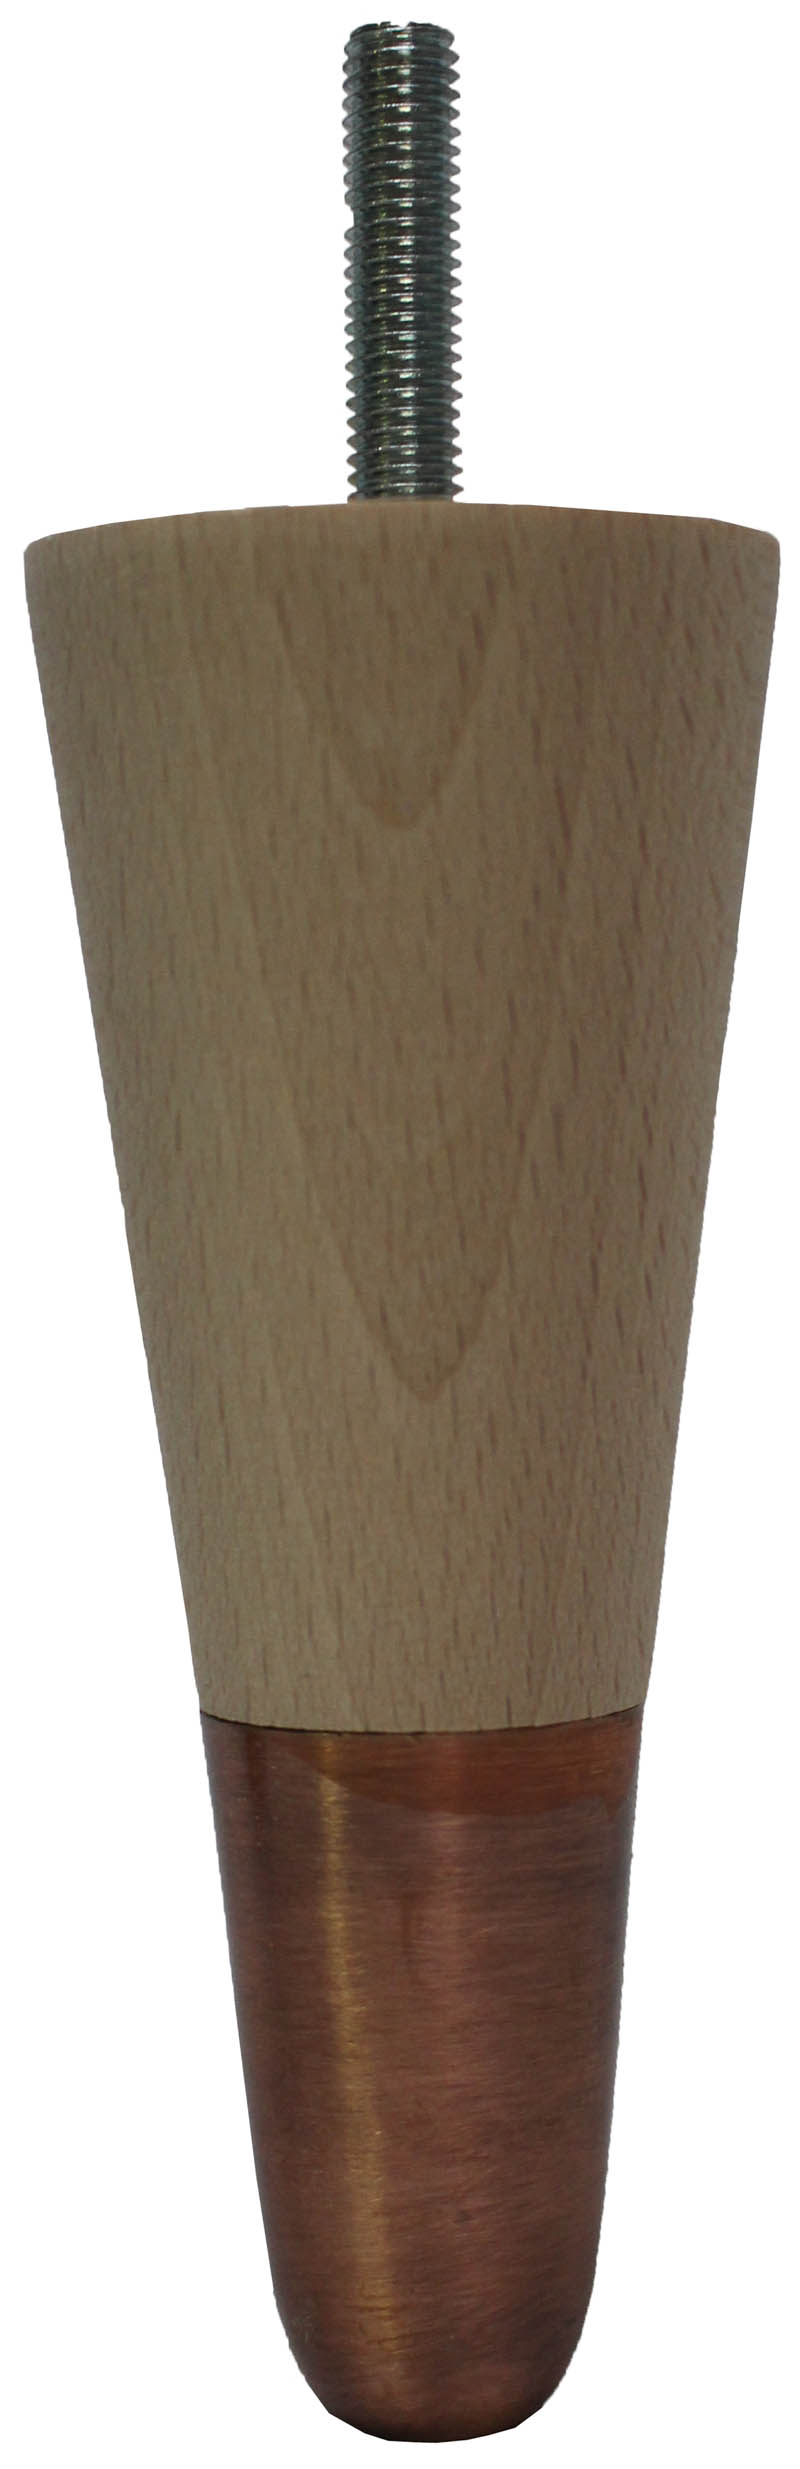 Azalea Tapered Furniture Legs - Raw Finish - Antique Copper Slipper Cups - Set of 4